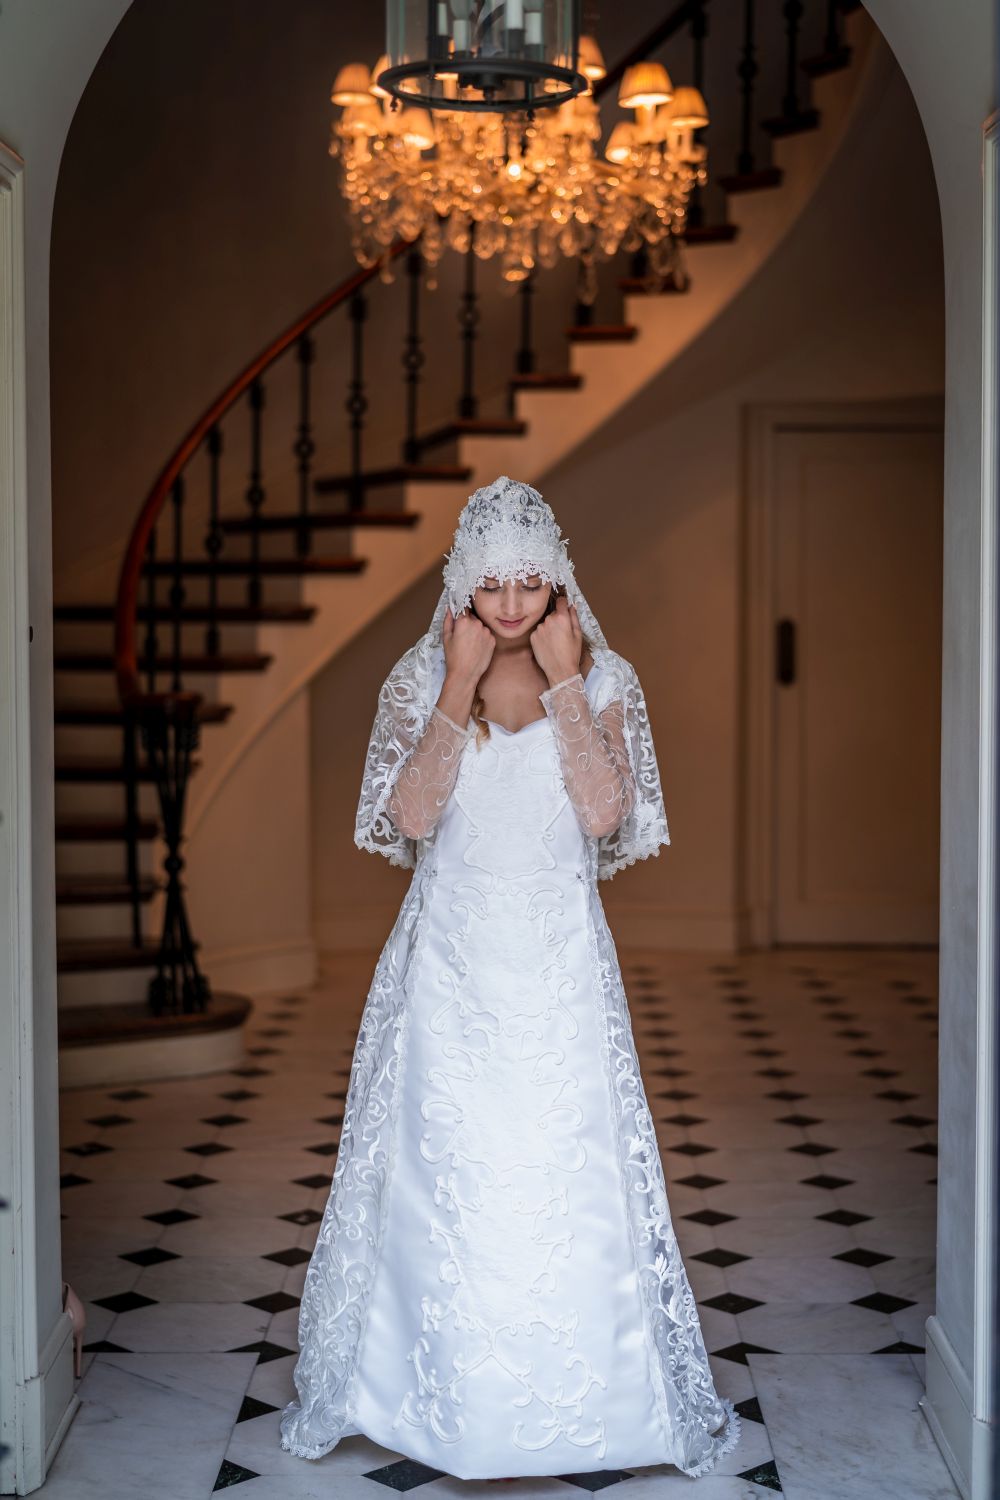 Padme' Amidala Wedding Dress Now Available - The Kessel Runway